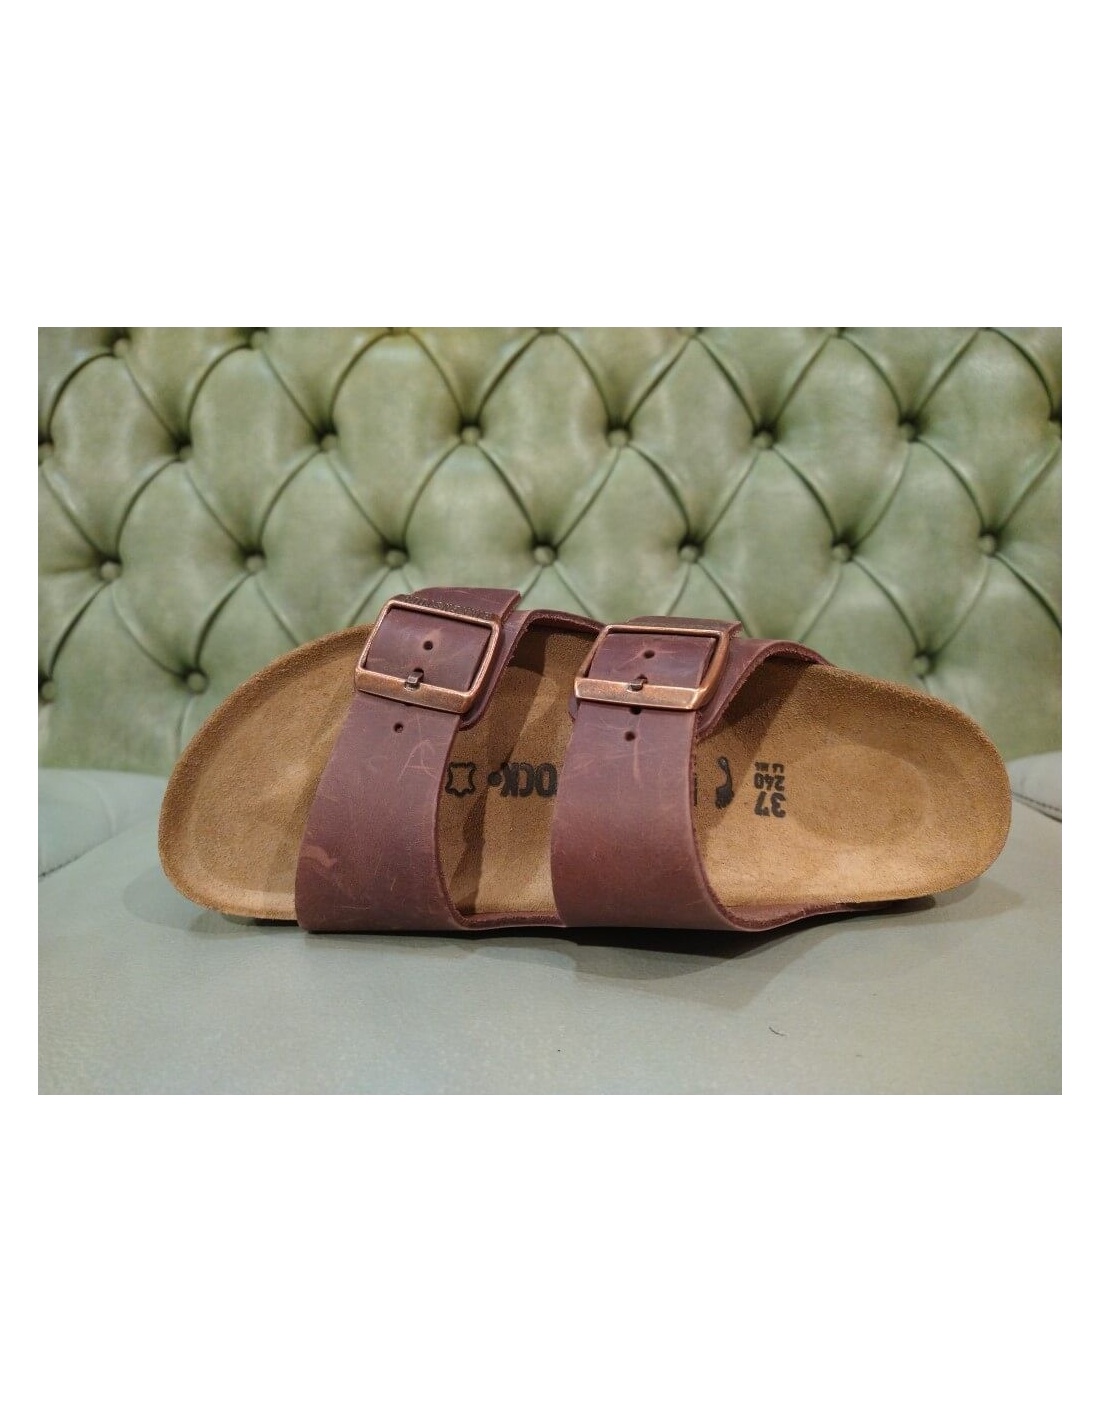 Birkenstock Arizona Soft-Footbed in Habana Oiled Leather